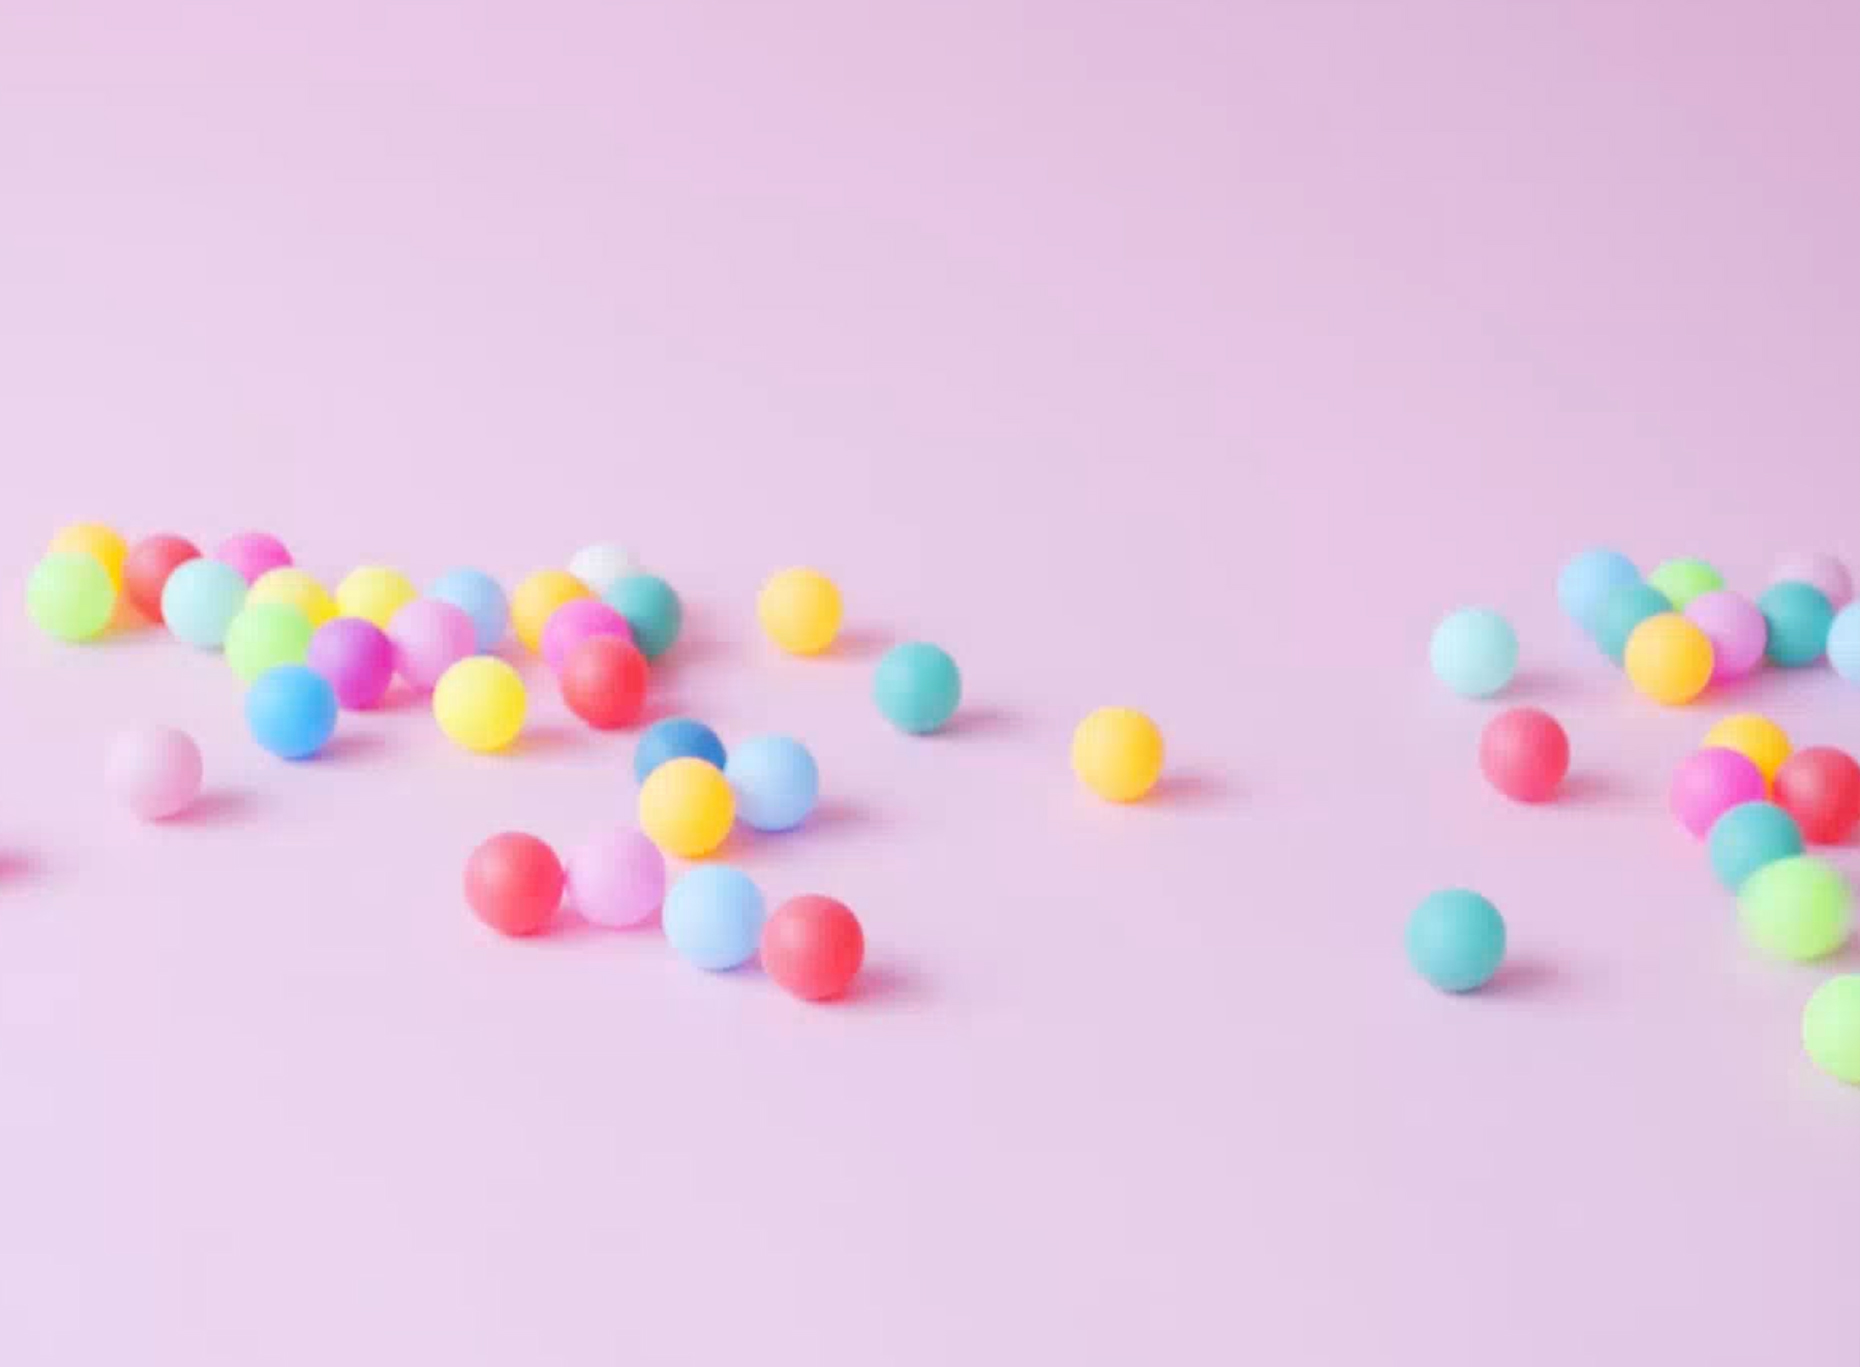 Ballpool balls rolling around a pink room